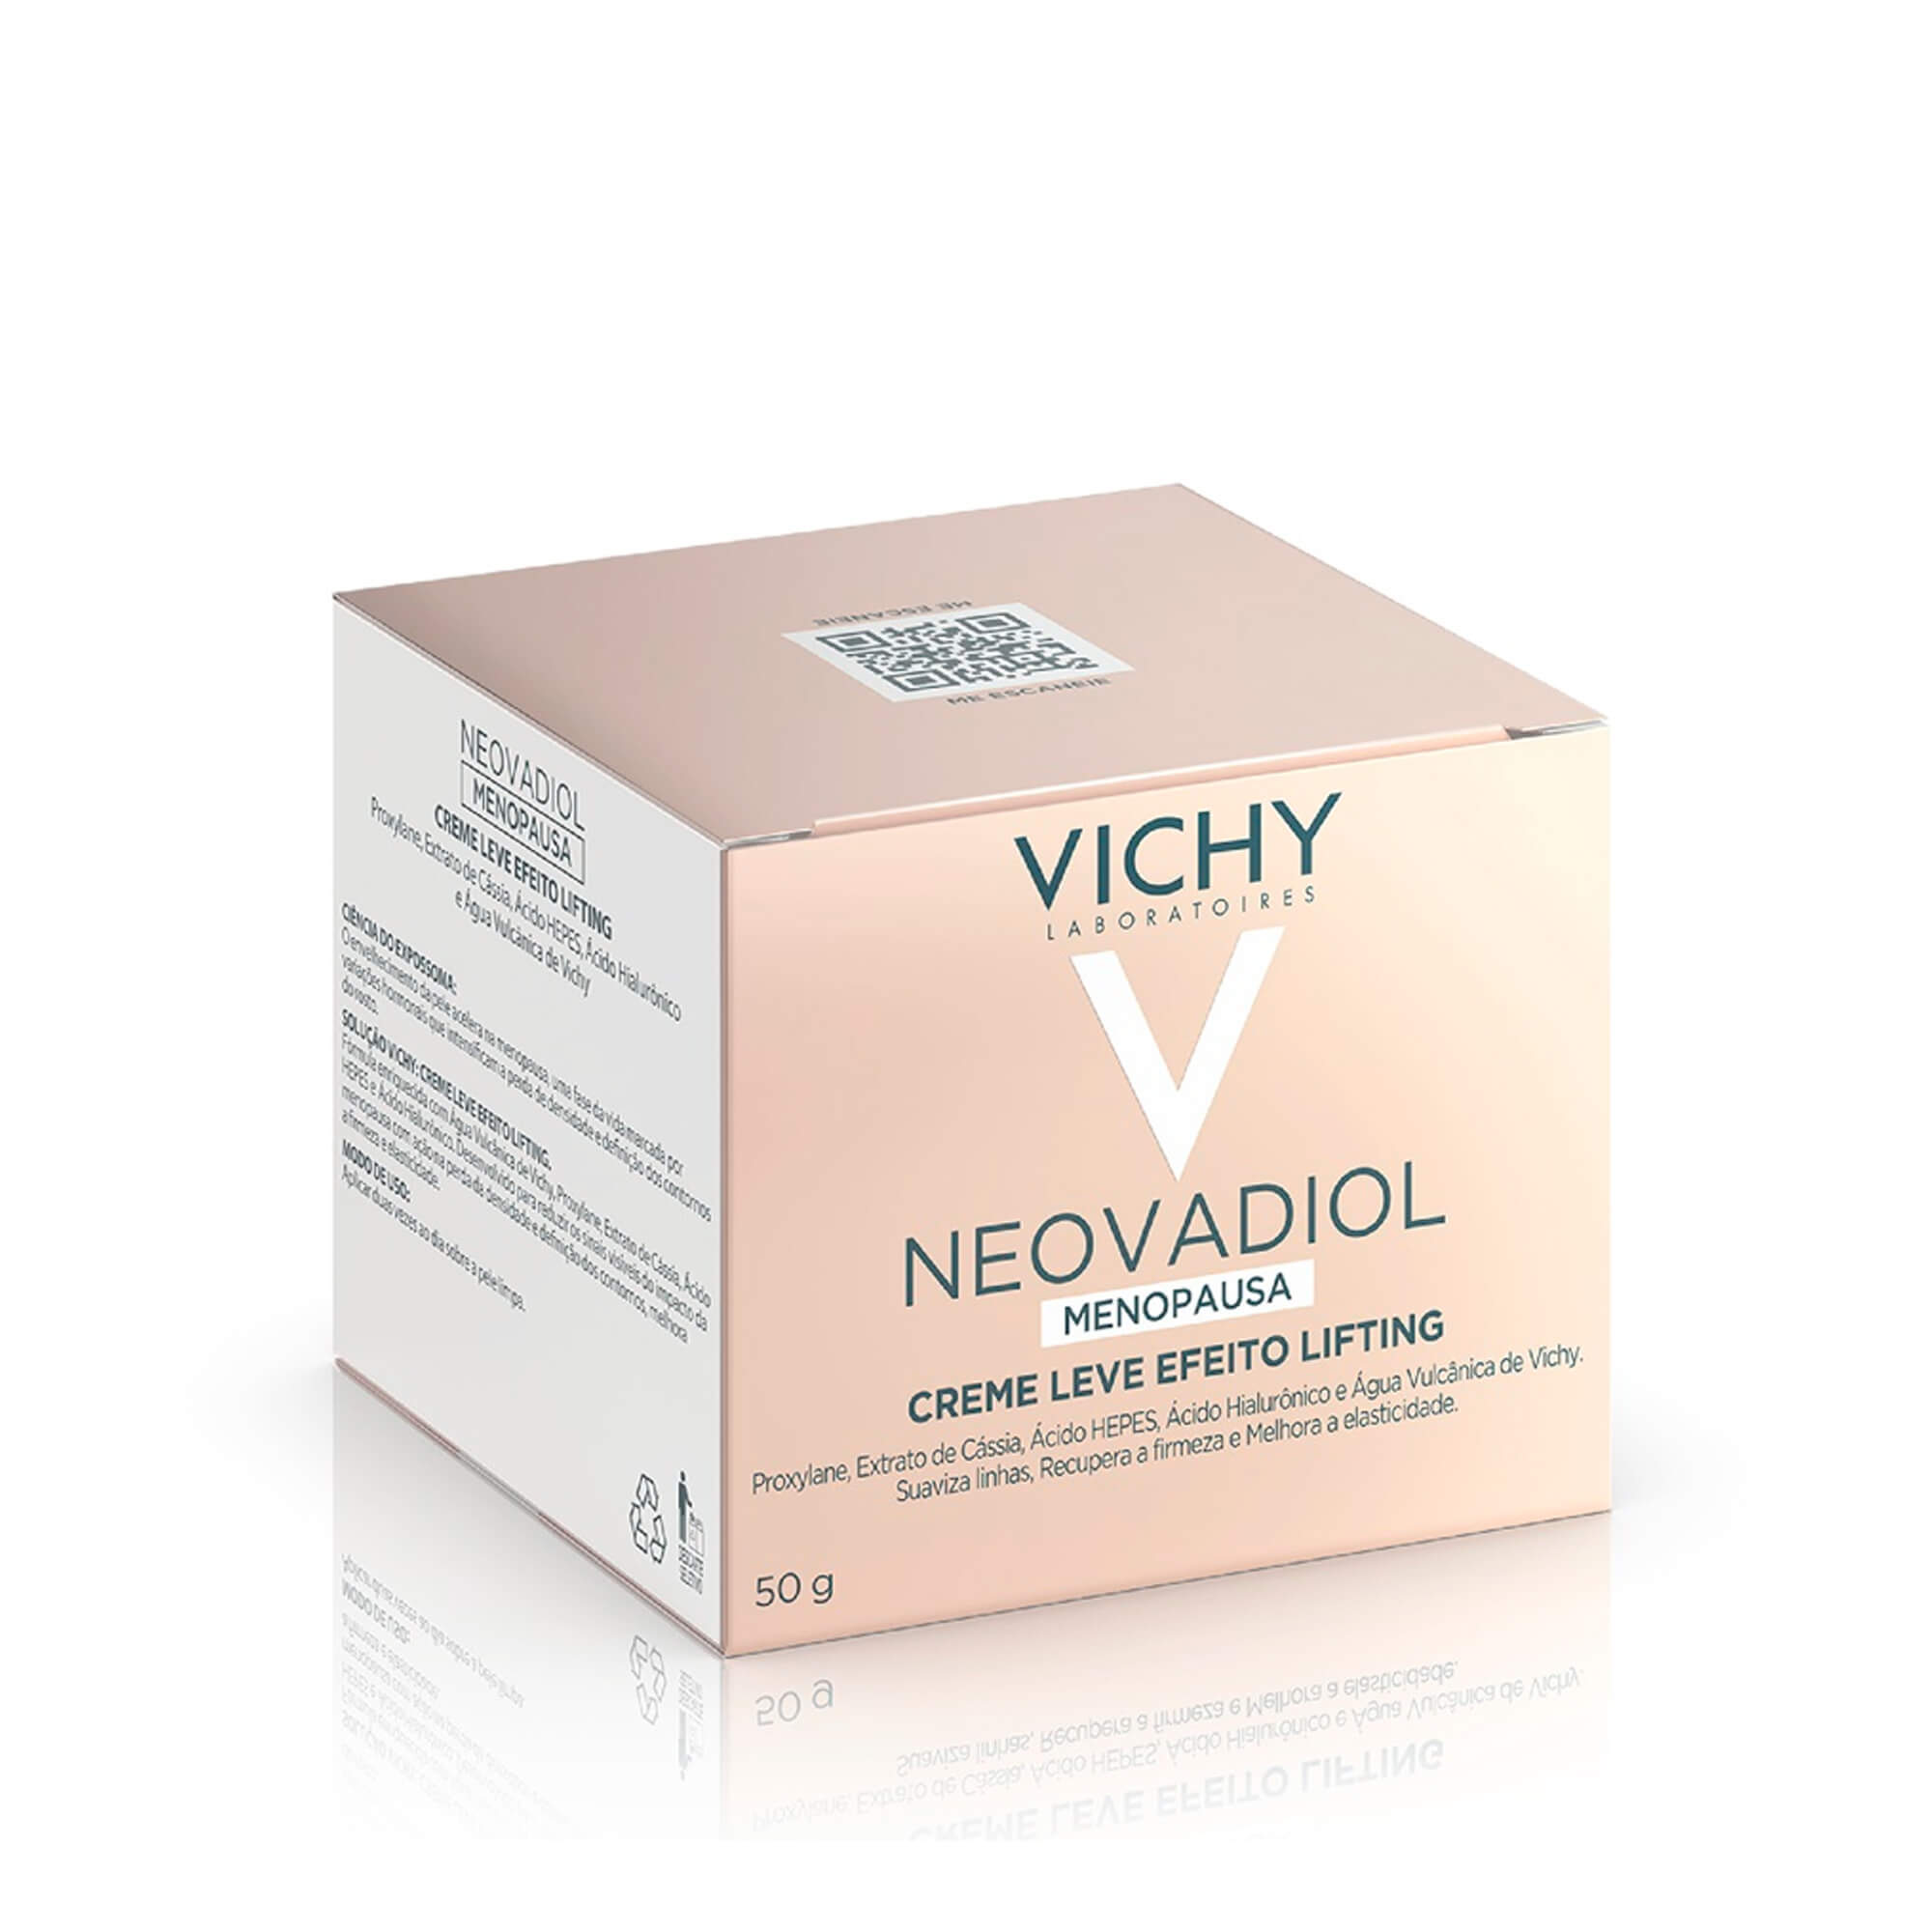 Creme Leve Efeito Lifting Vichy Neovadiol Menopausa - 50g | Galeria 09